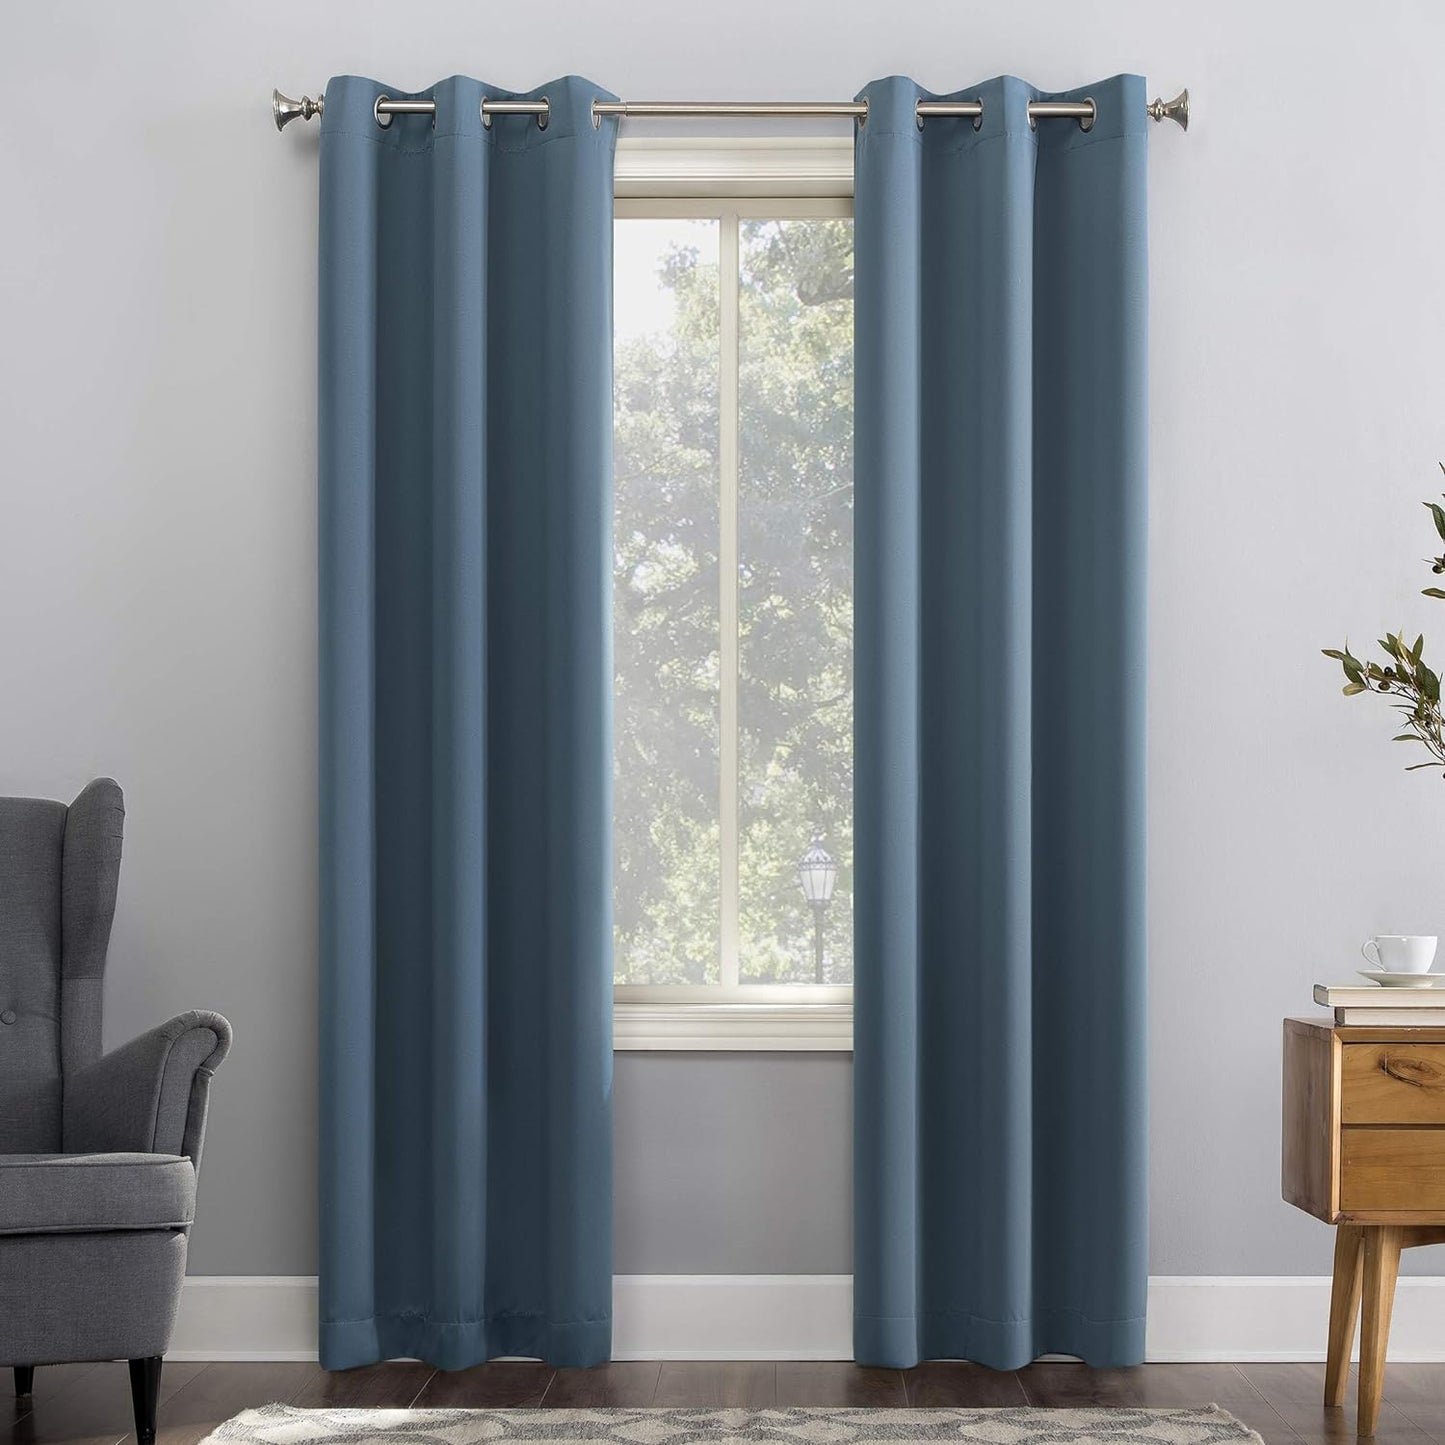 Sun Zero Easton Energy Saving Blackout Grommet Curtain Panel, 40" X 63", Mineral  Sun Zero Denim Blue Curtain Panel 40" X 95"